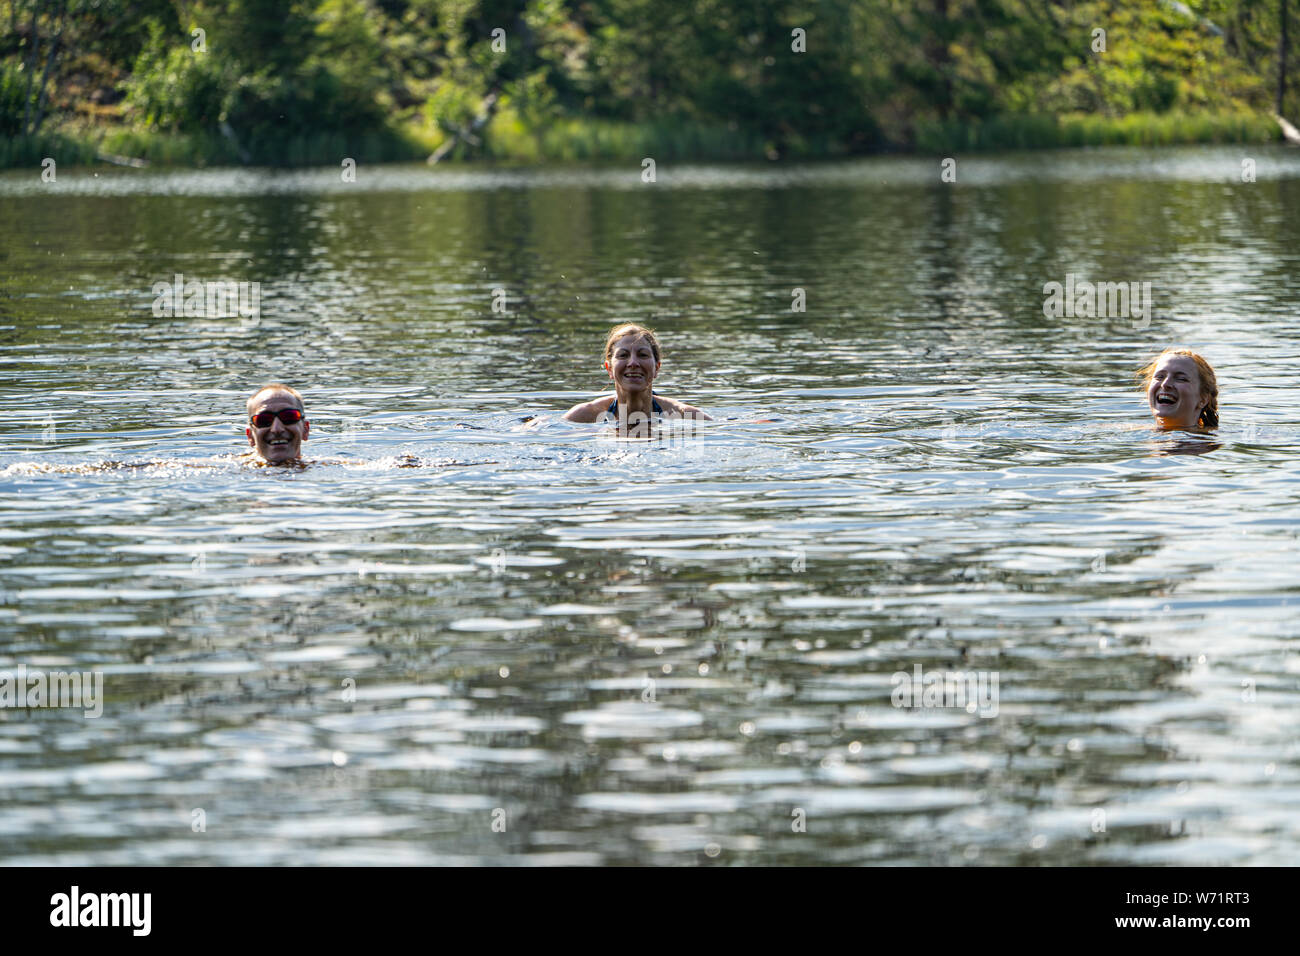 People wild swimming in the Black River (Svartälven), Sweden Stock Photo